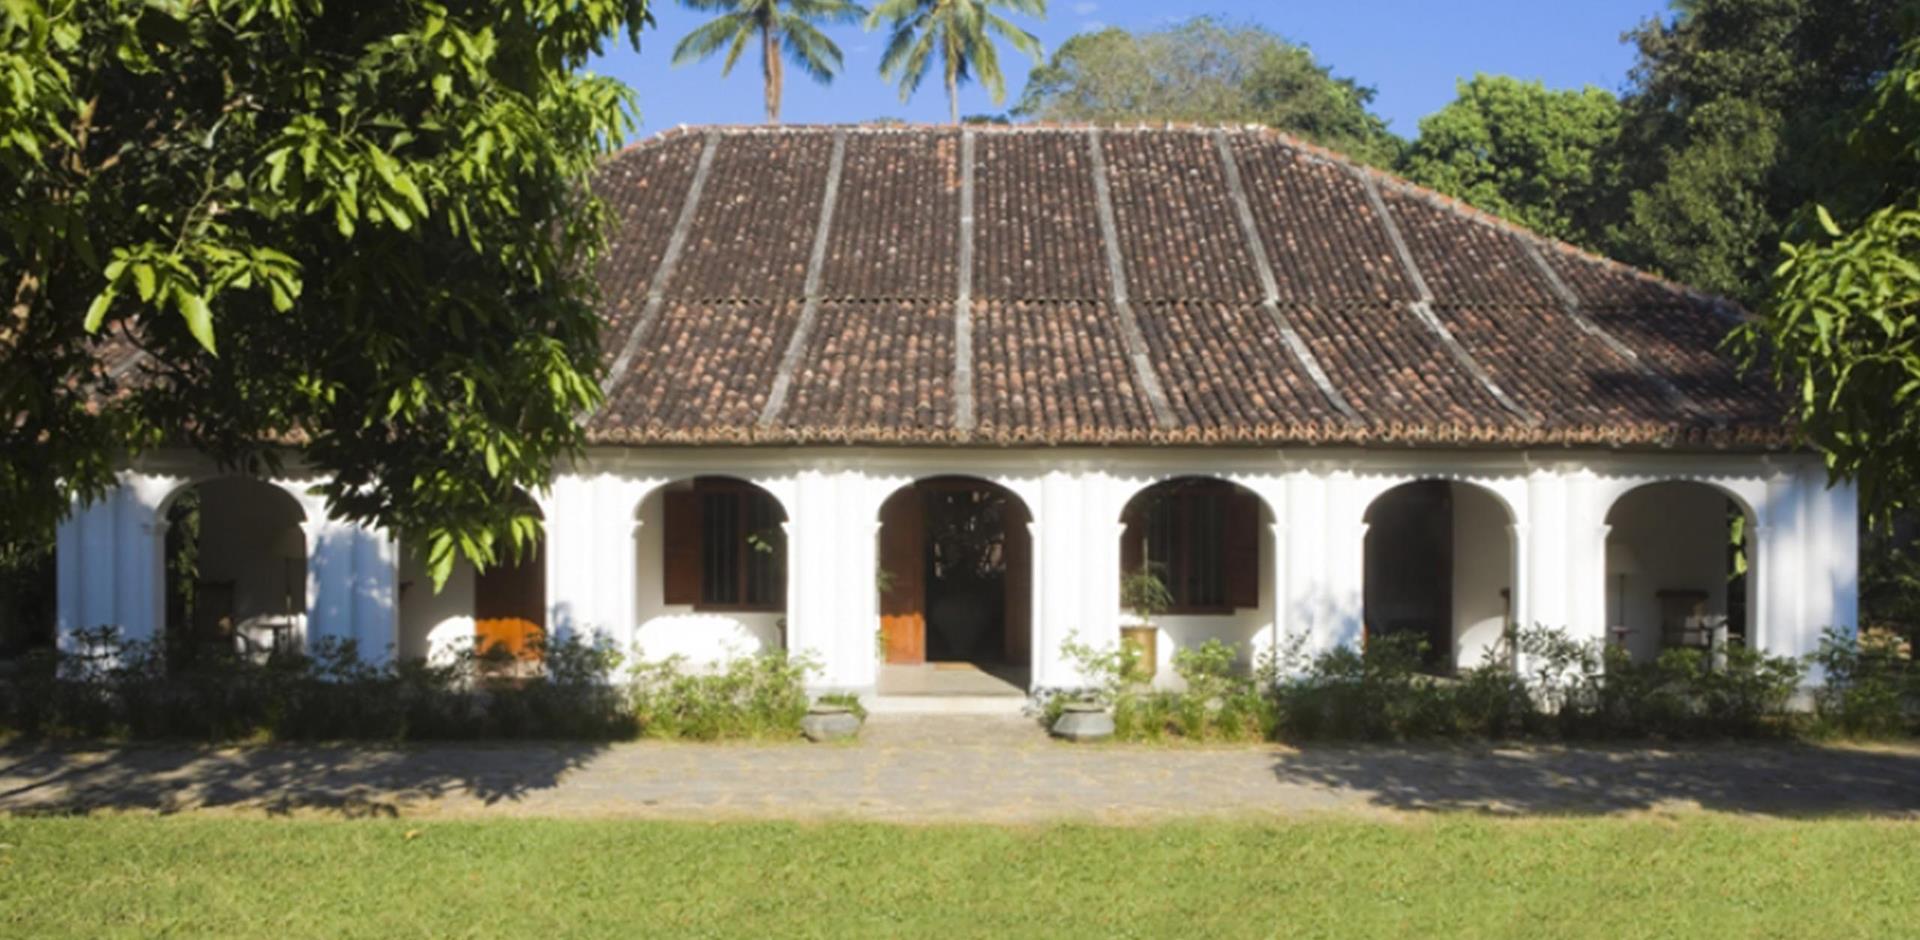 Exterior, The Kandy House, Sri Lanka